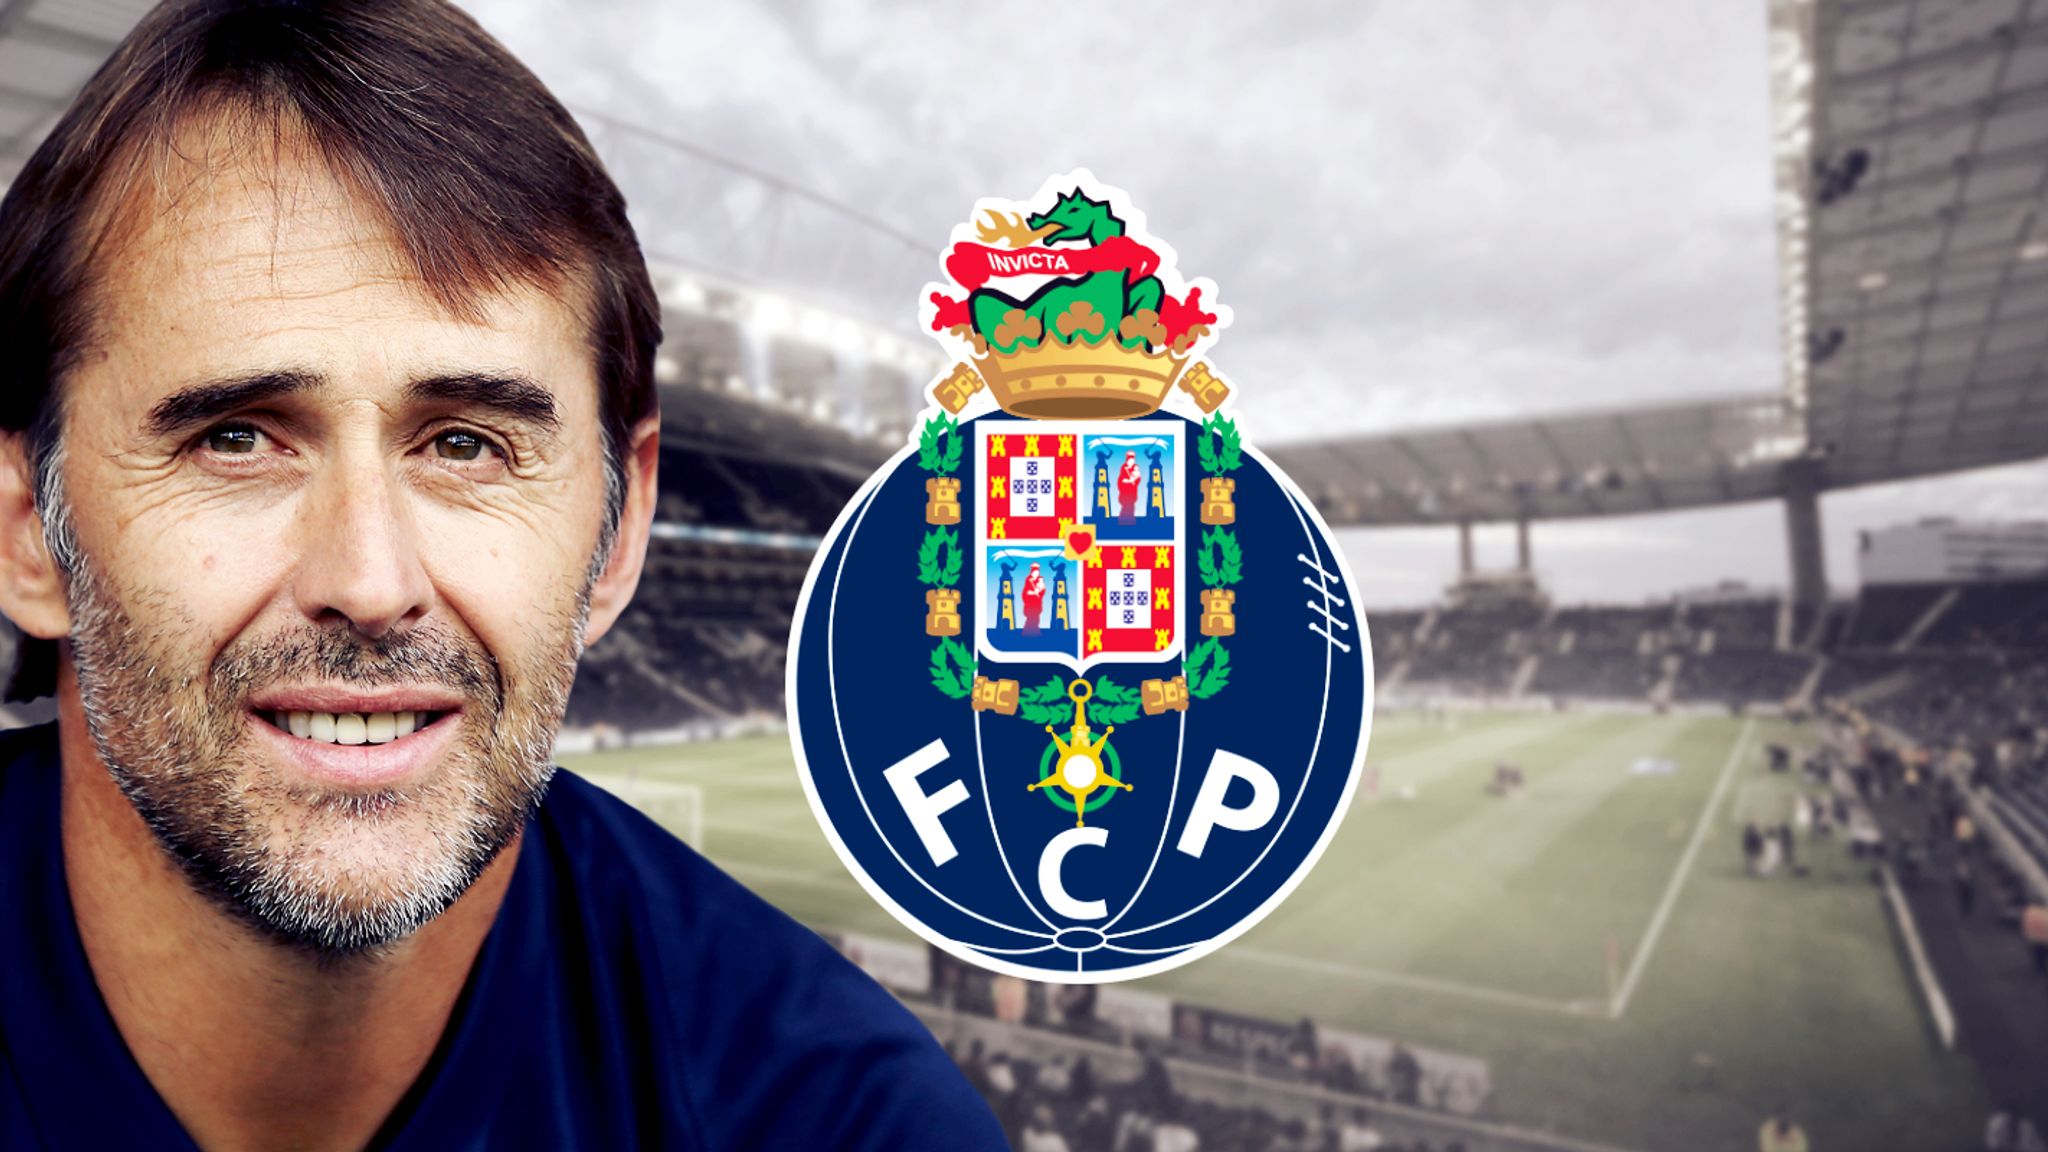 is Julen Lopetegui? Profile of the Porto boss ready to beat Bayern | Football News | Sky Sports